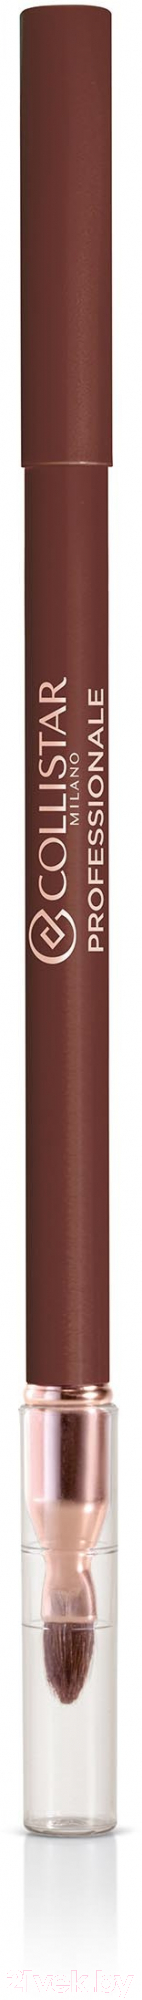 Карандаш для губ Collistar Professionale Lip Pencil Long-Lasting Waterproof тон 4 Caffe